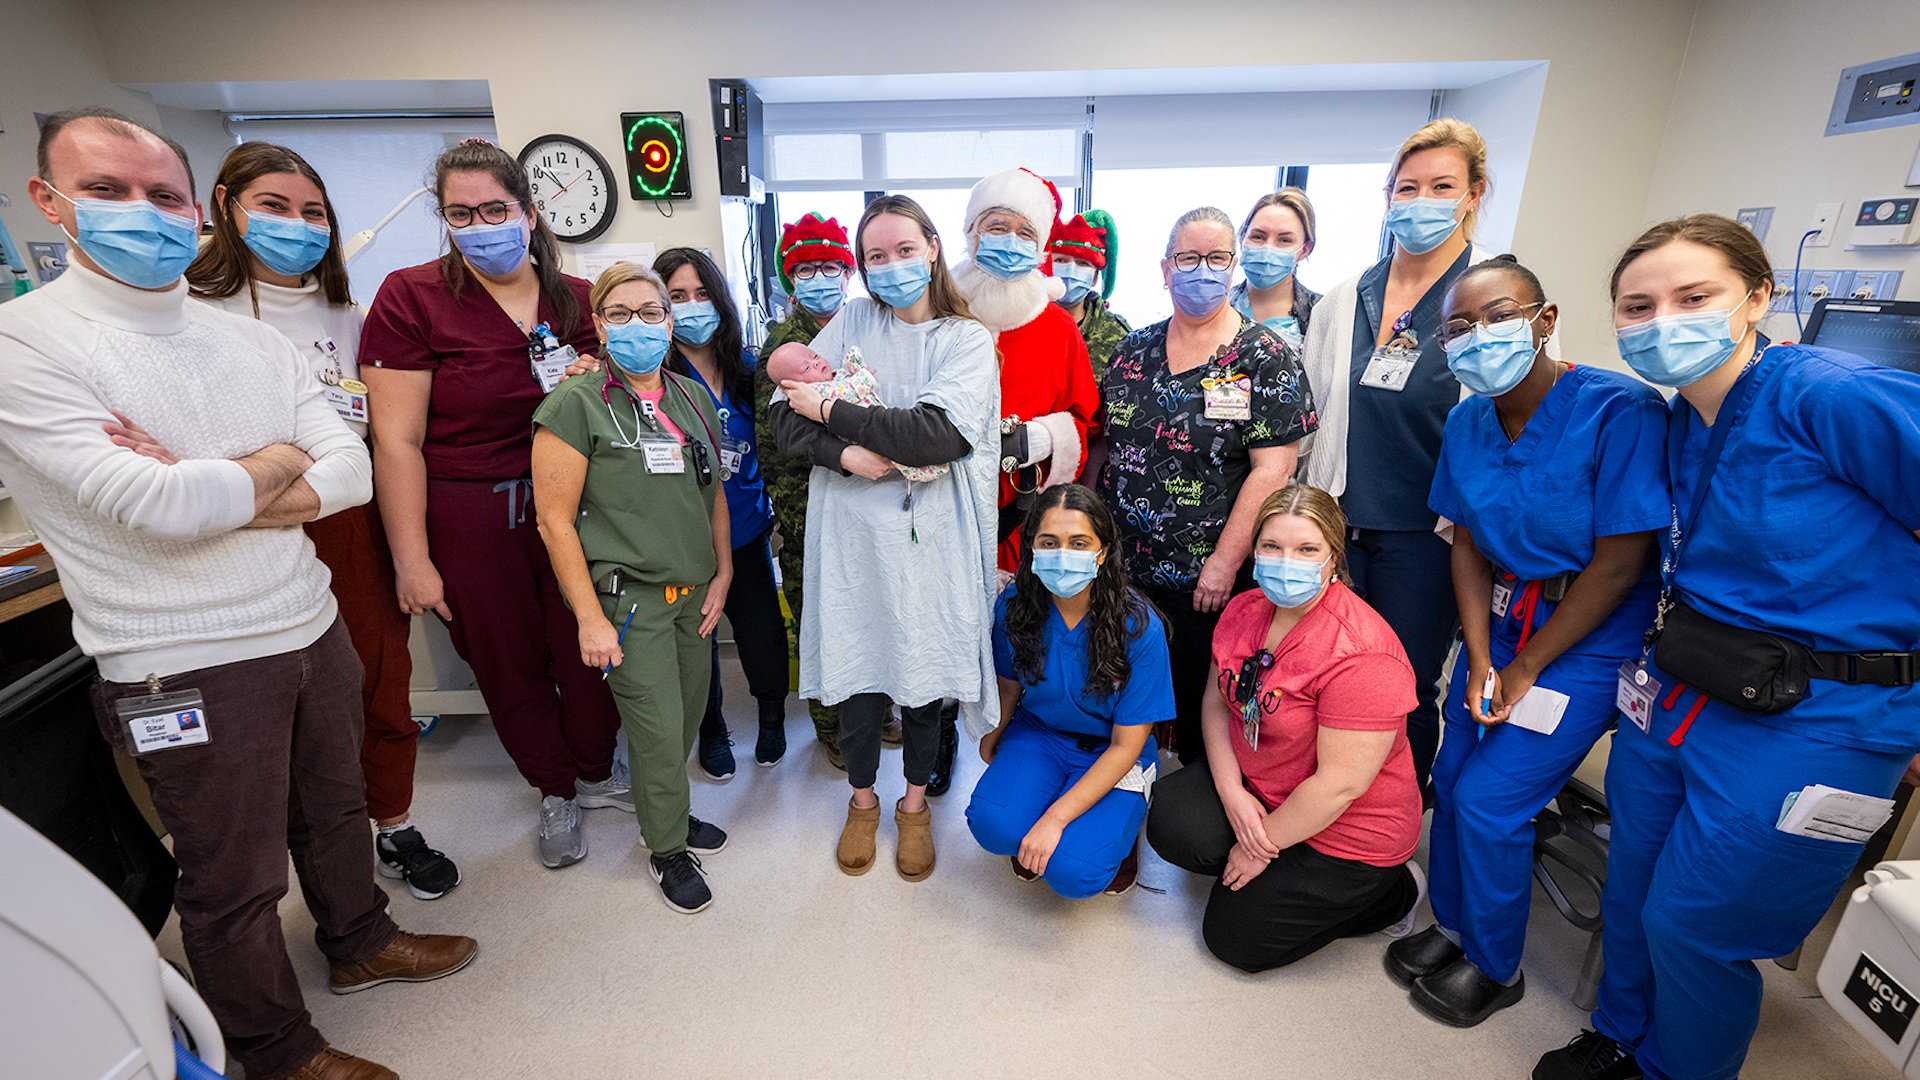 Santa brings holiday cheer to sick kids in Kingston, Ont.